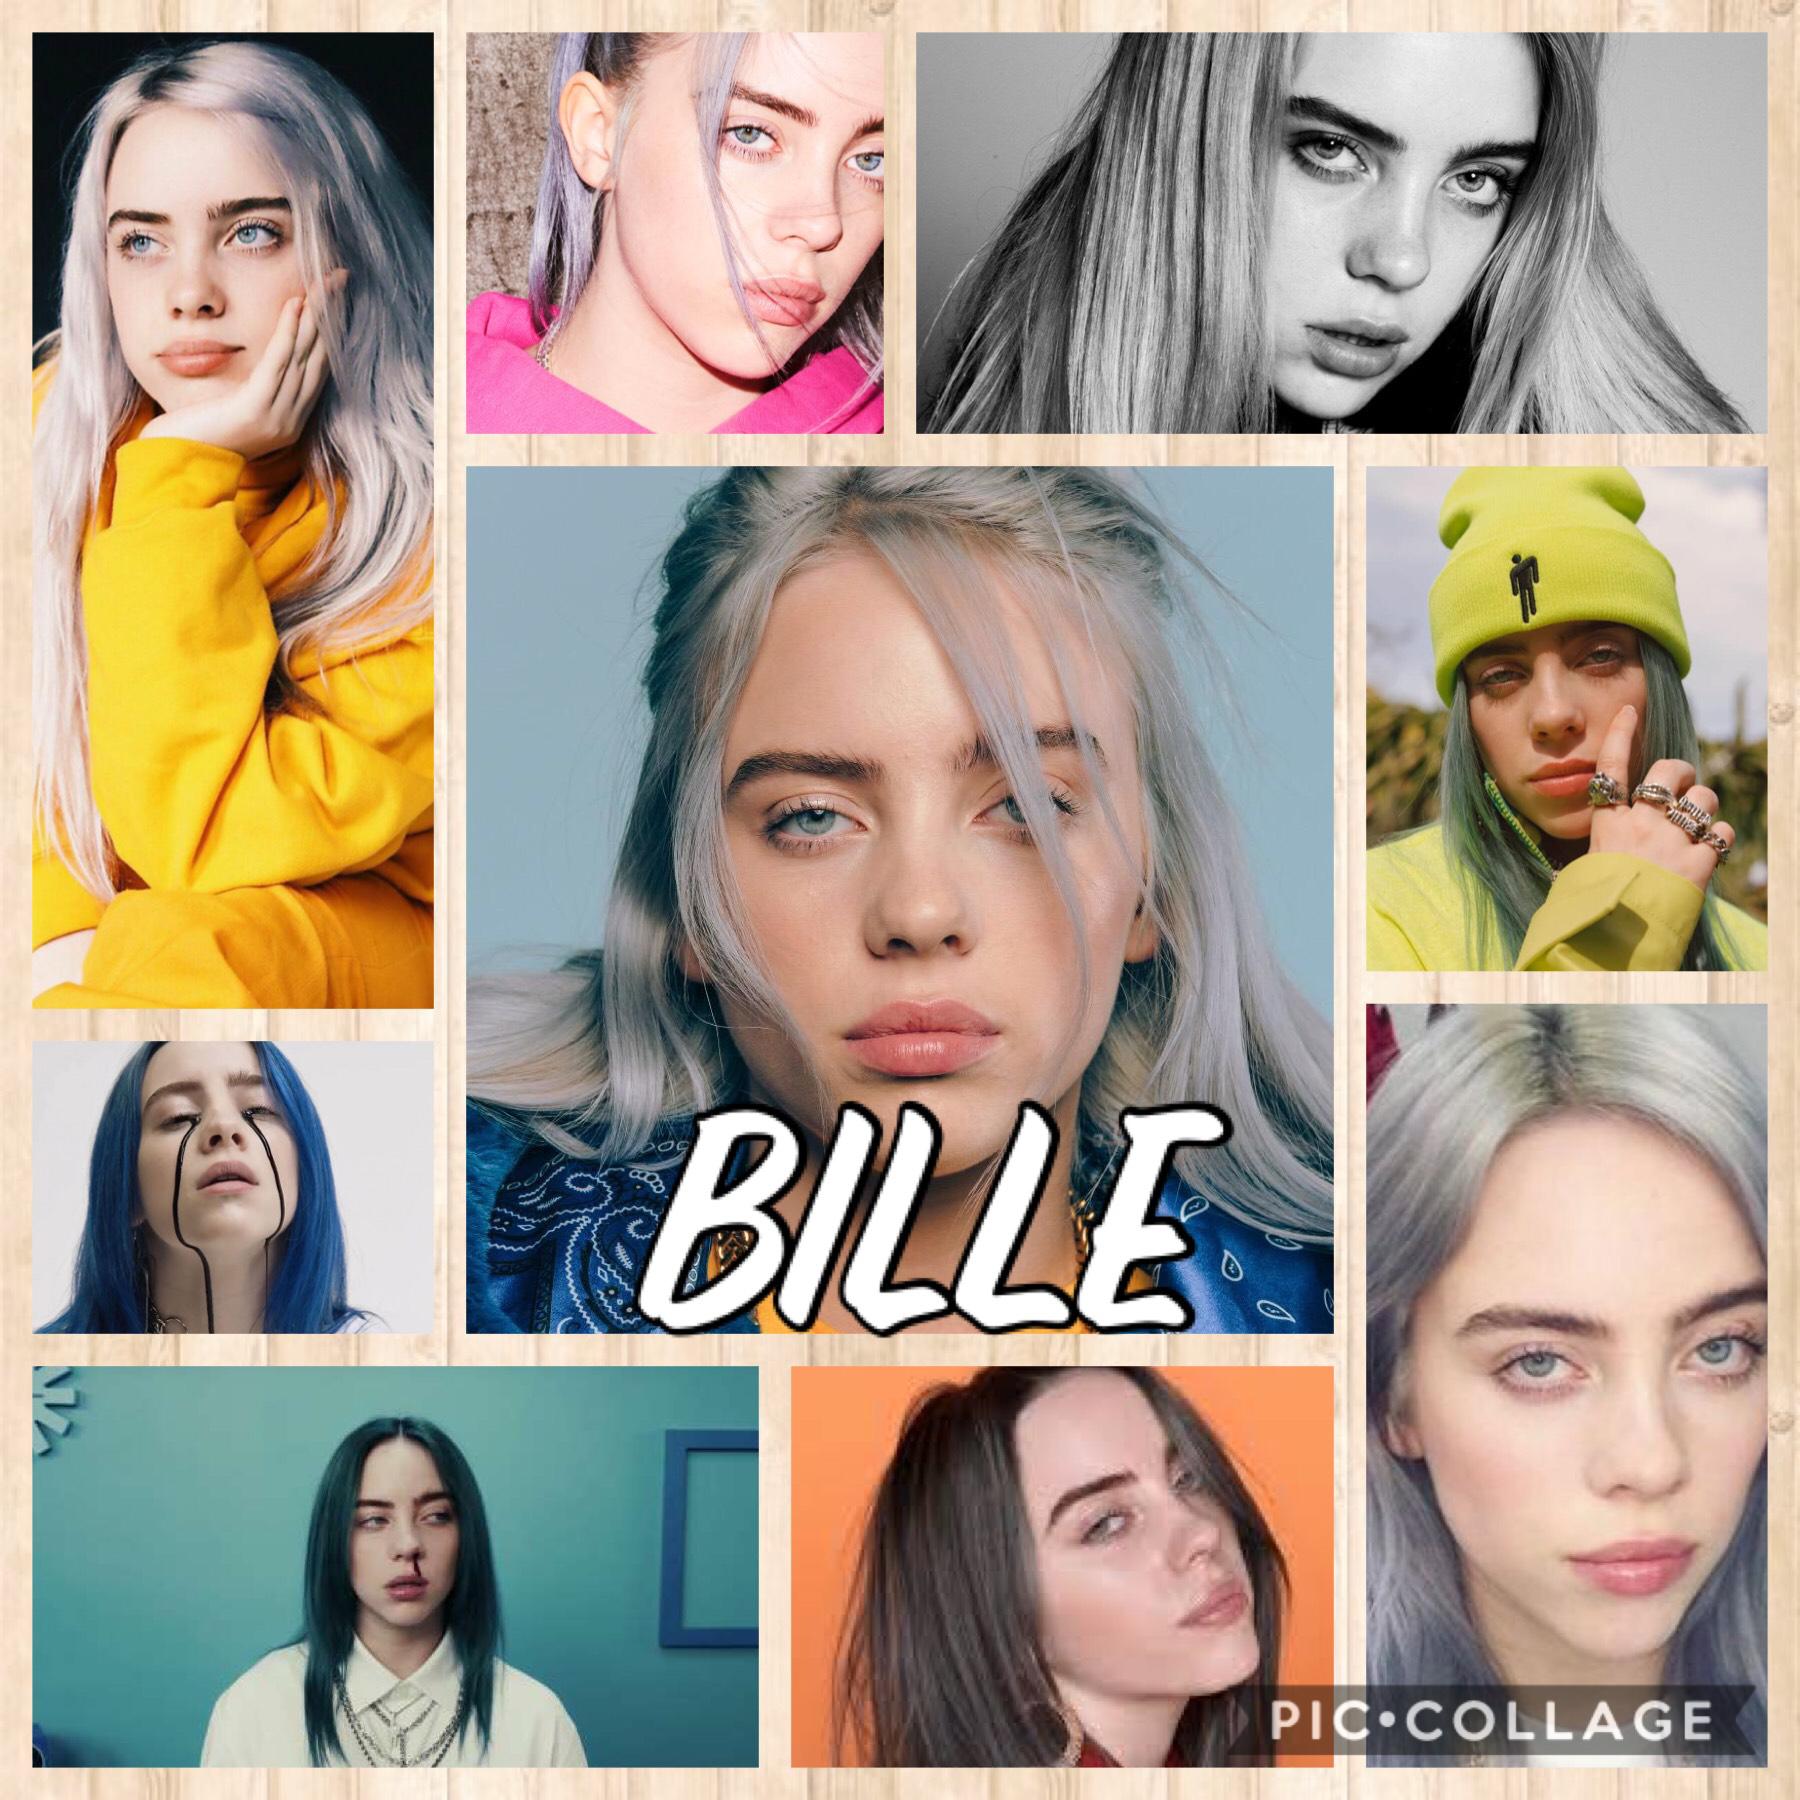 Who else loves bille eillish,also like who dose not like bille